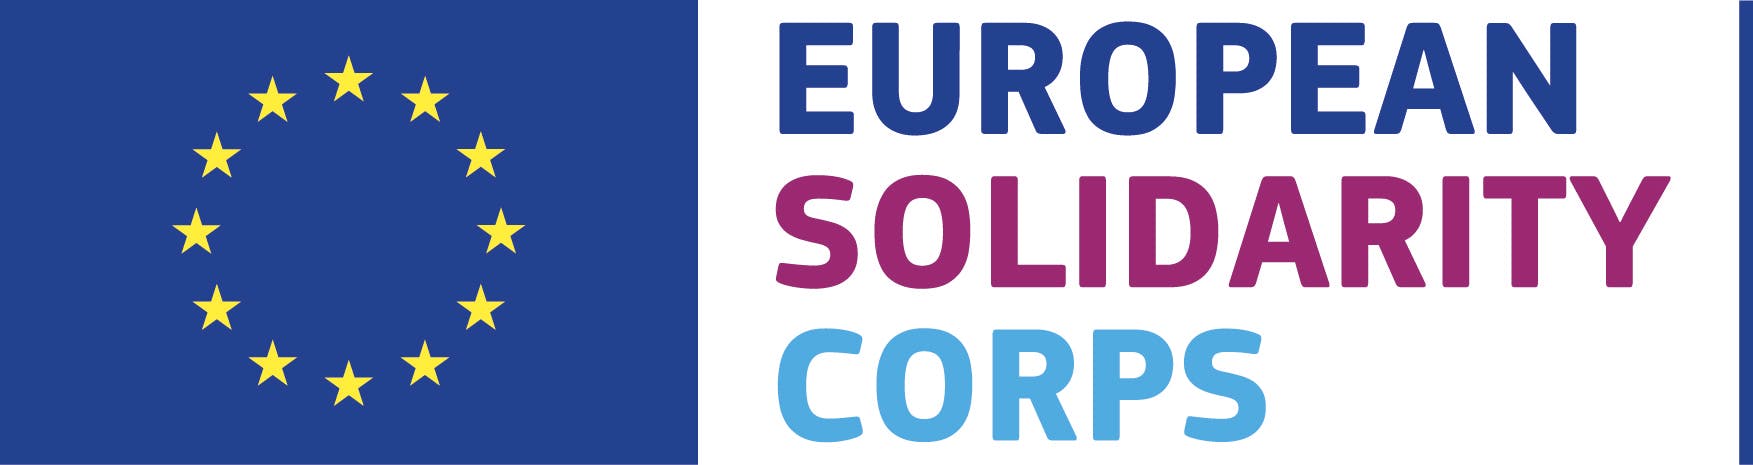 en_european_solidarity_corps_logo_cmyk_1.jpg